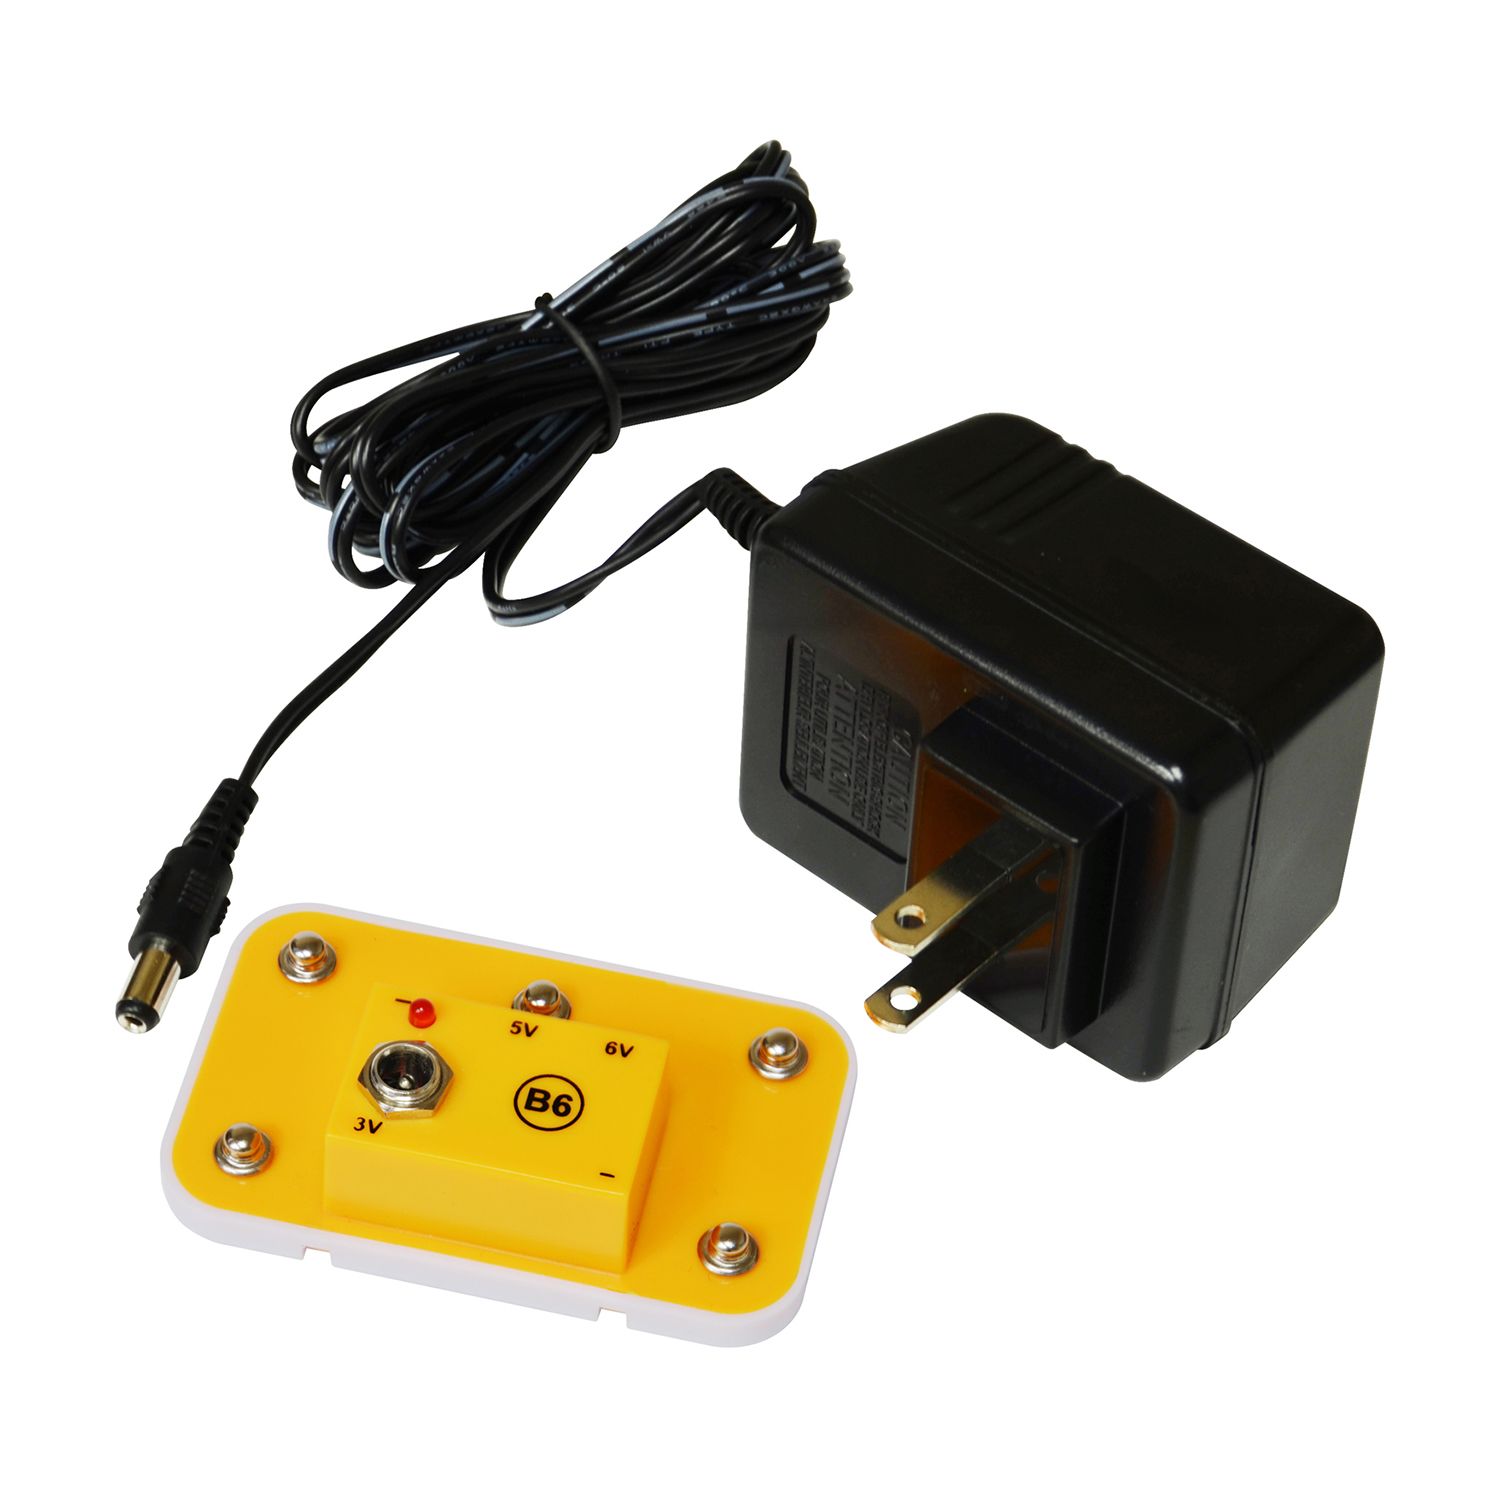 Elenco Snap Circuits Pro Kit